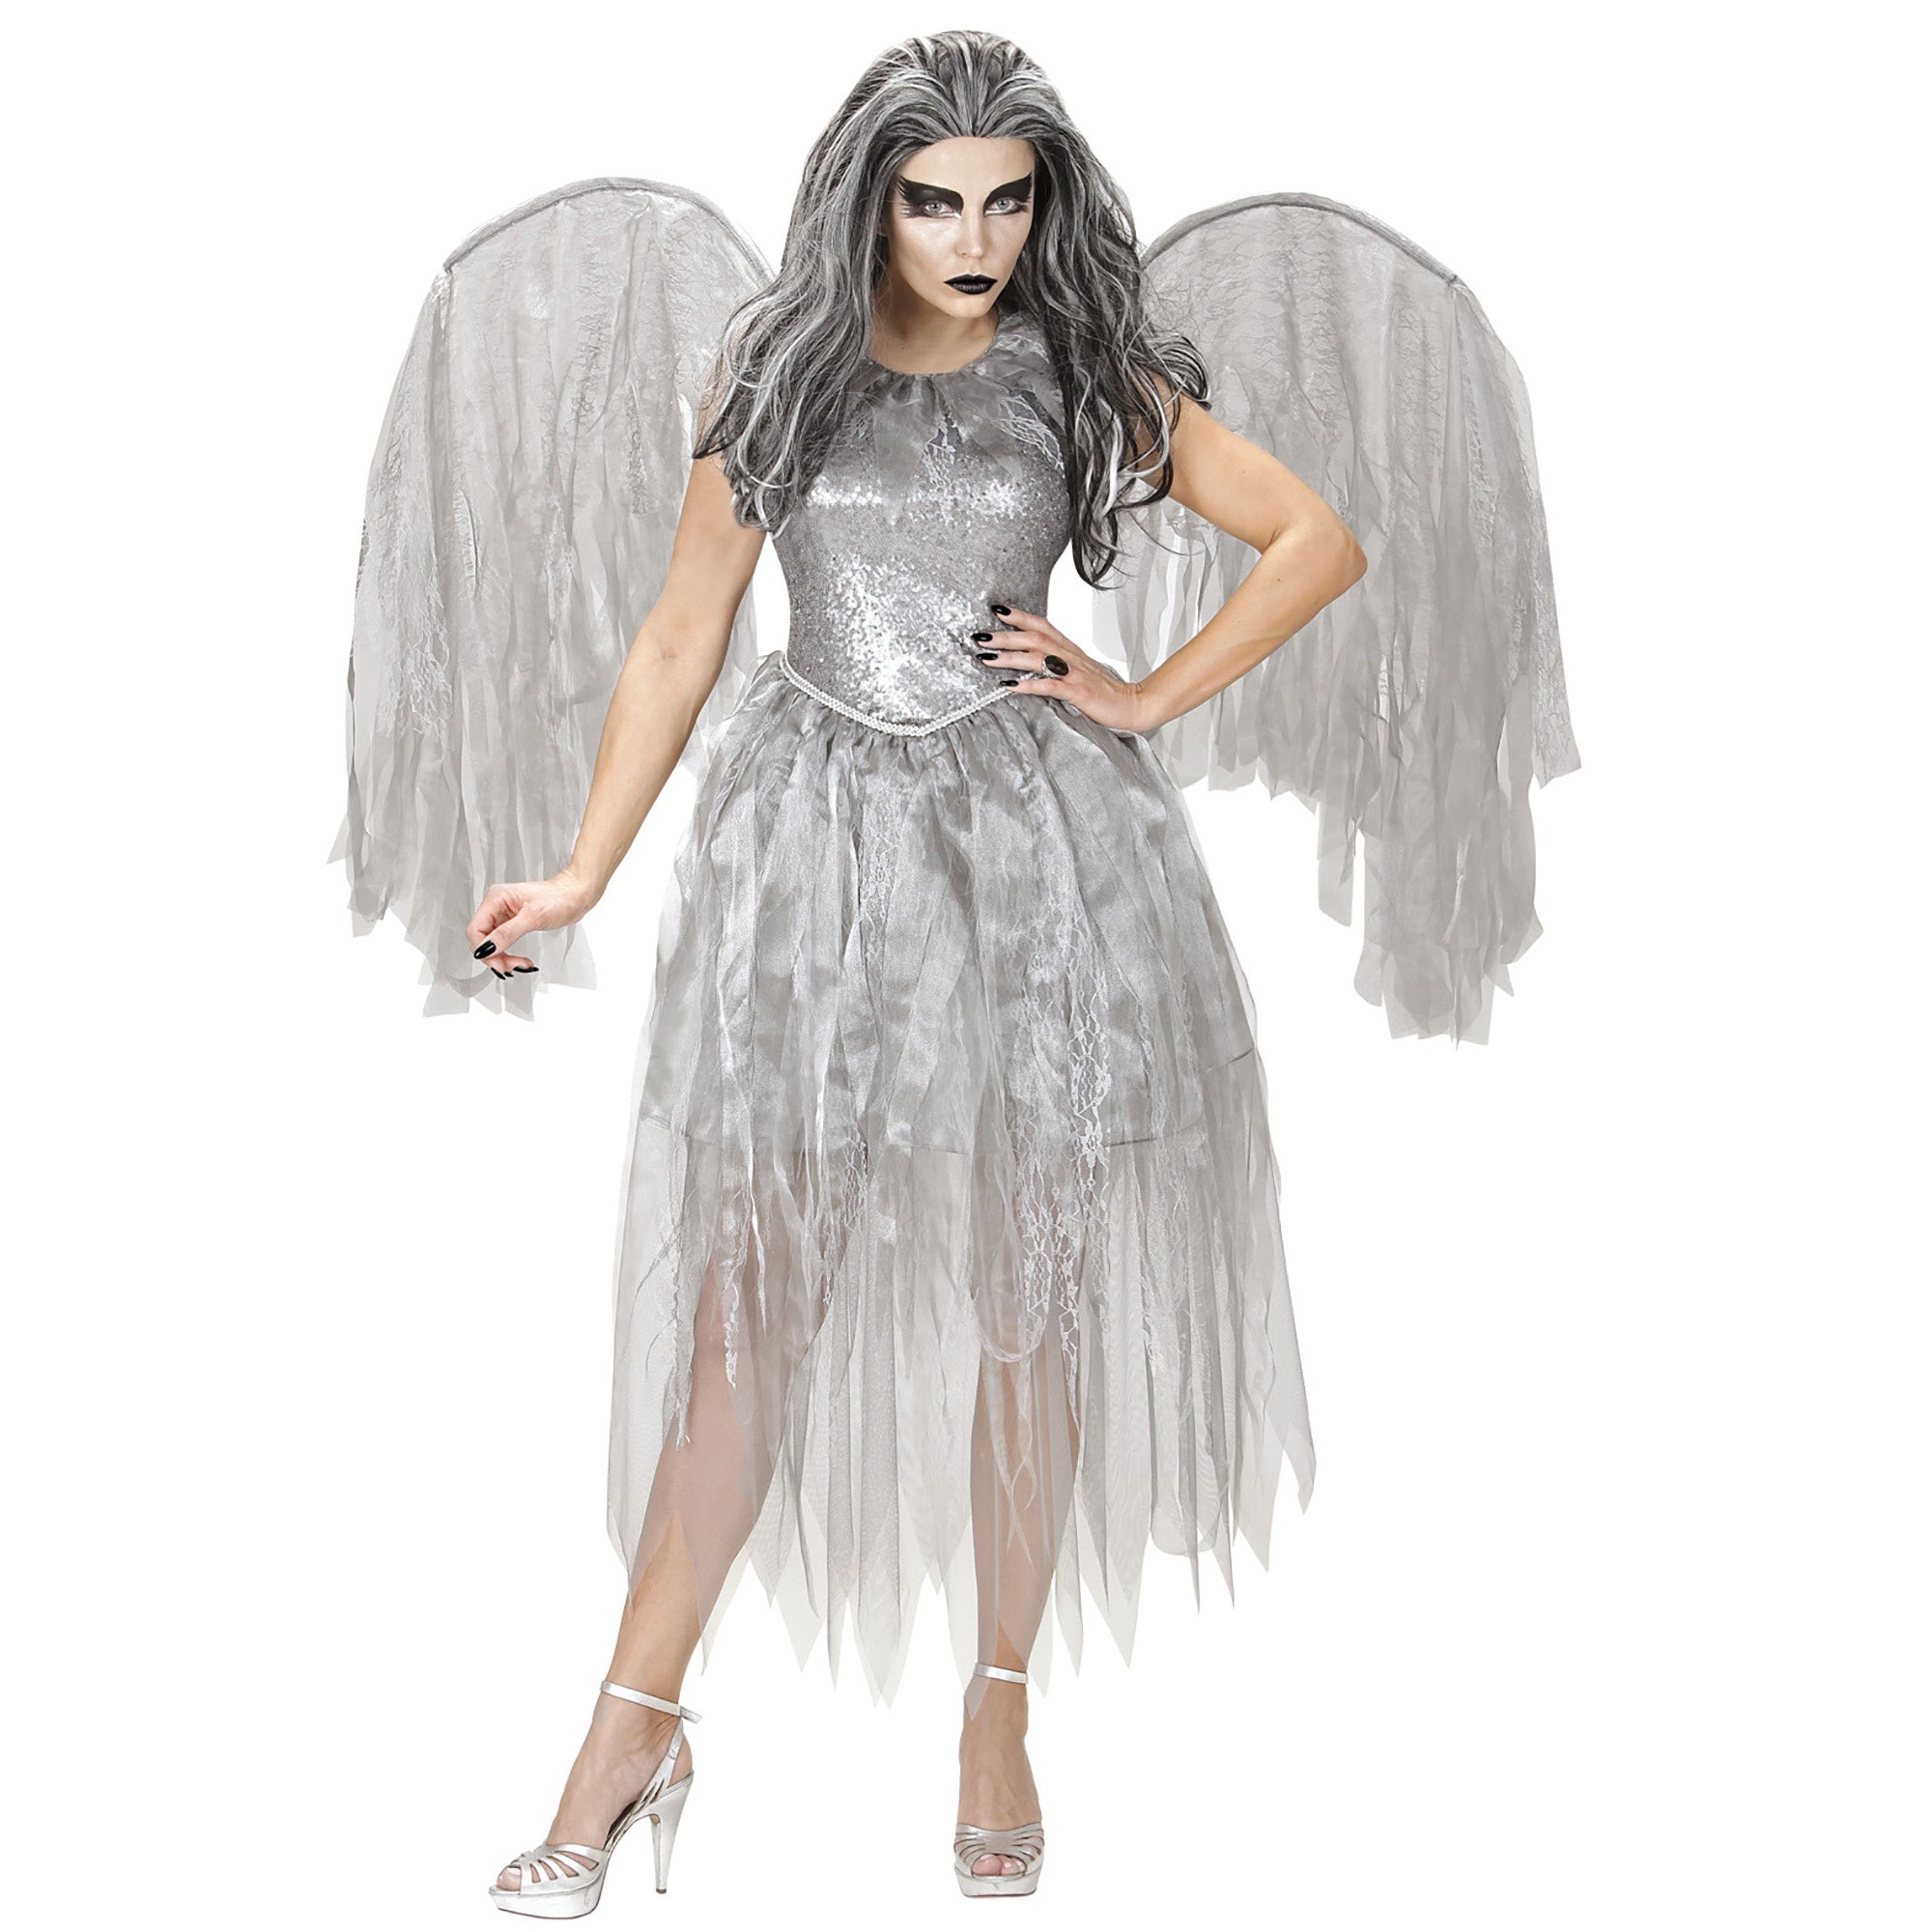 Widmann - Engel Kostuum - Donkere Engel Argenta - Vrouw - zilver - Large - Halloween - Verkleedkleding